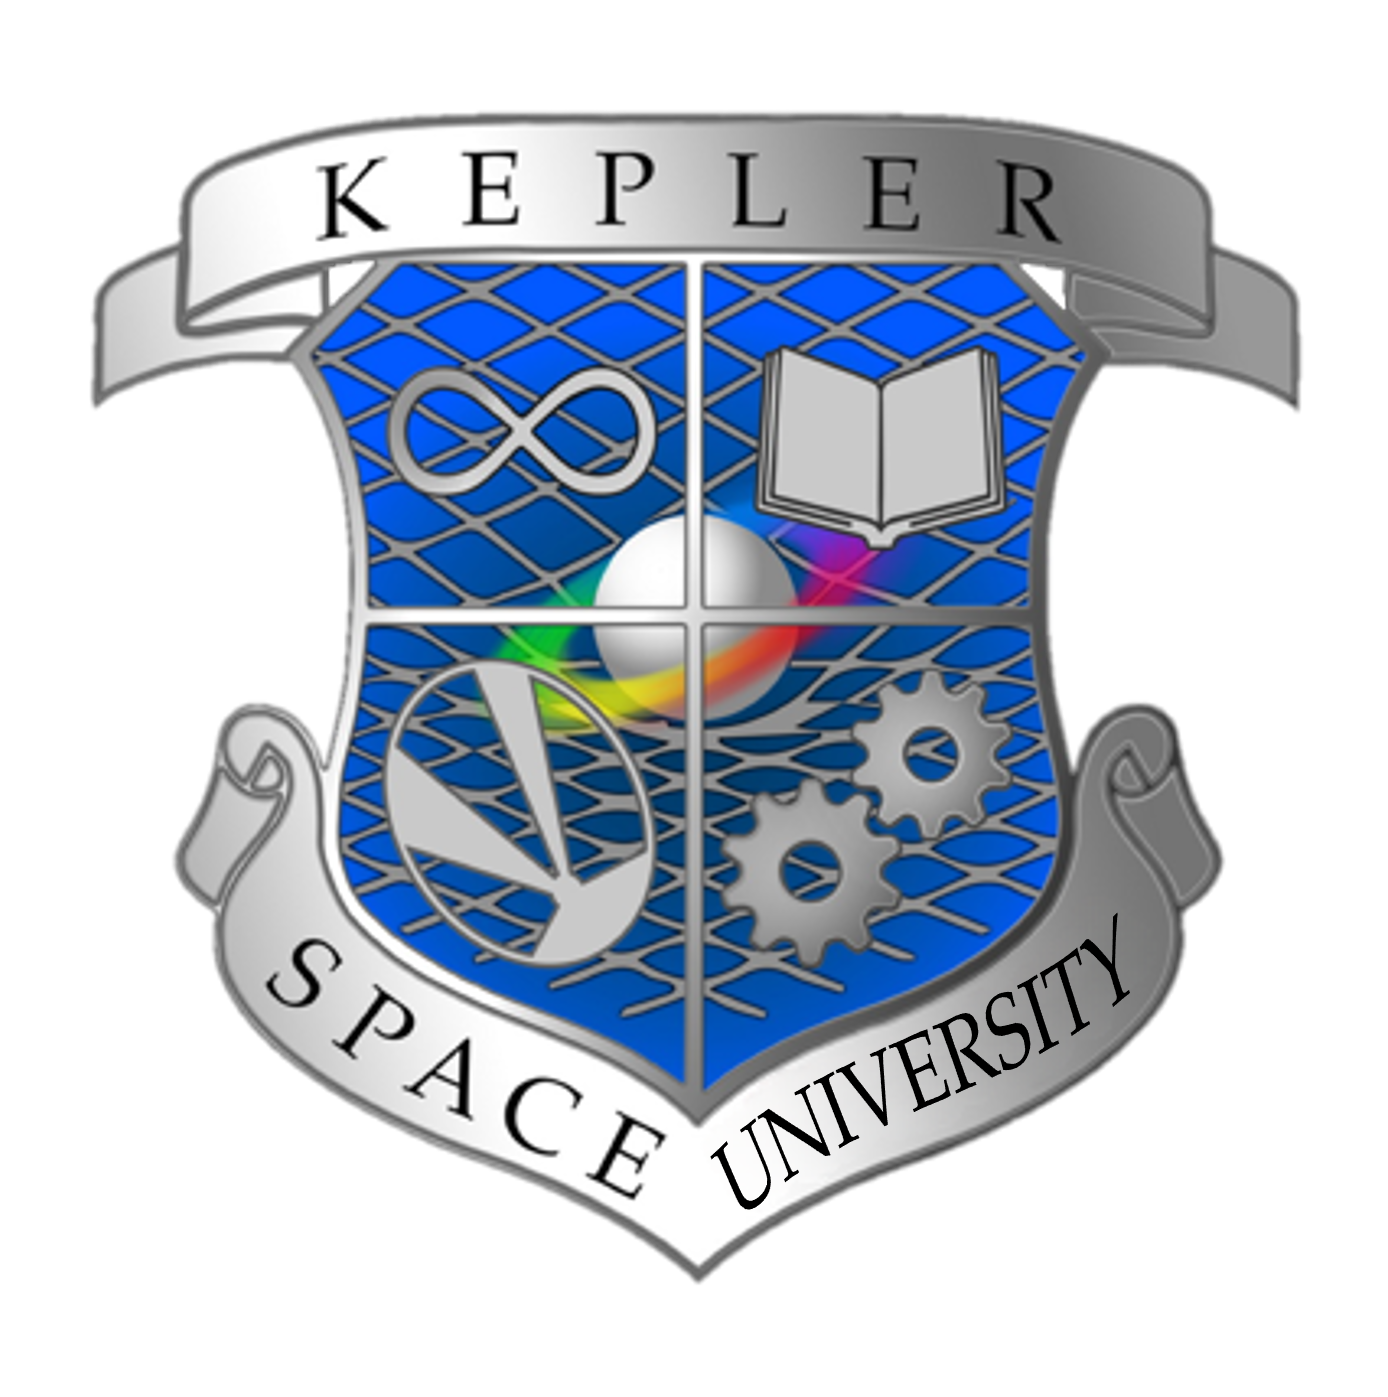 Kepler Space University